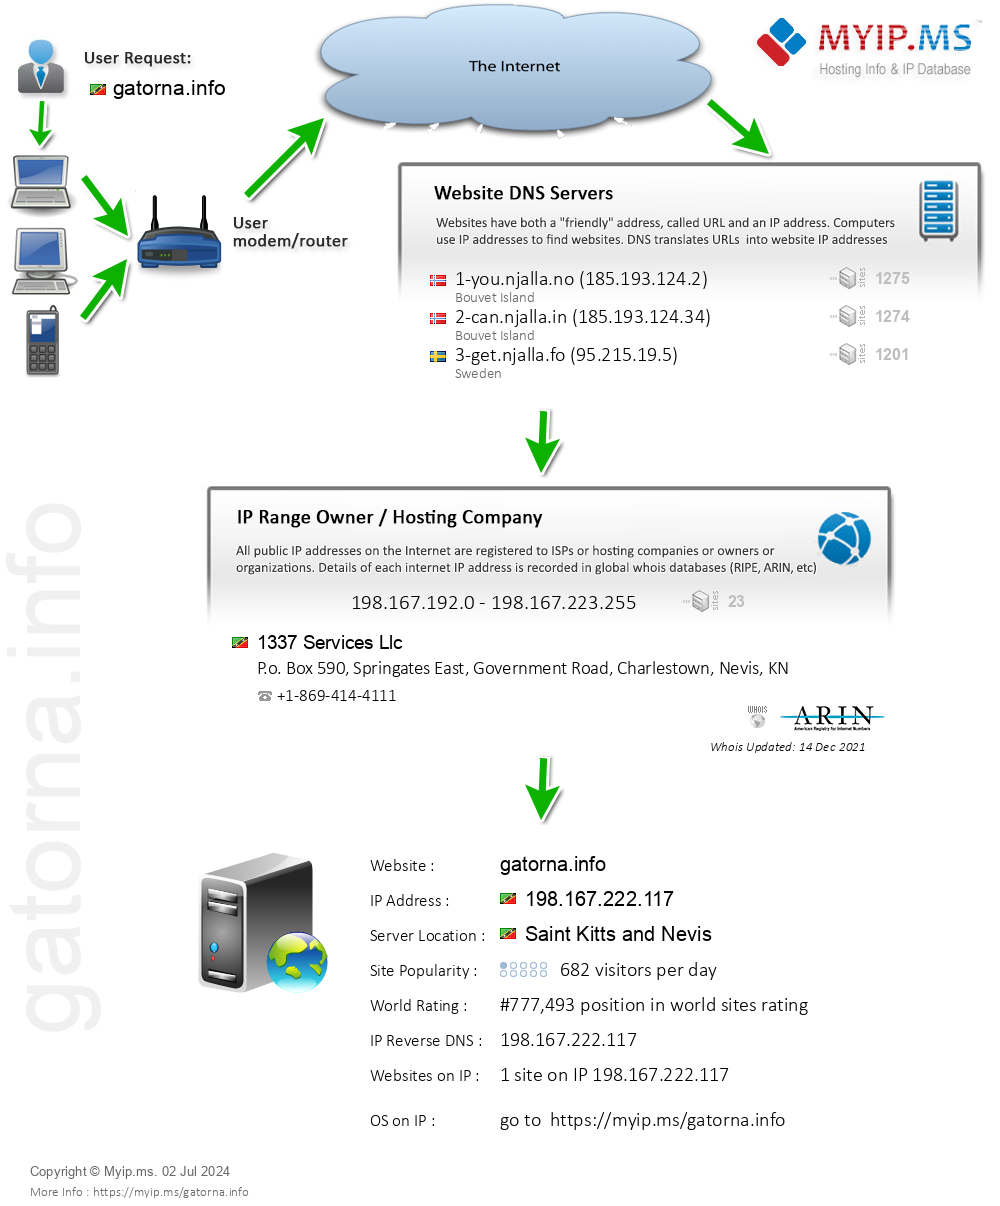 Gatorna.info - Website Hosting Visual IP Diagram